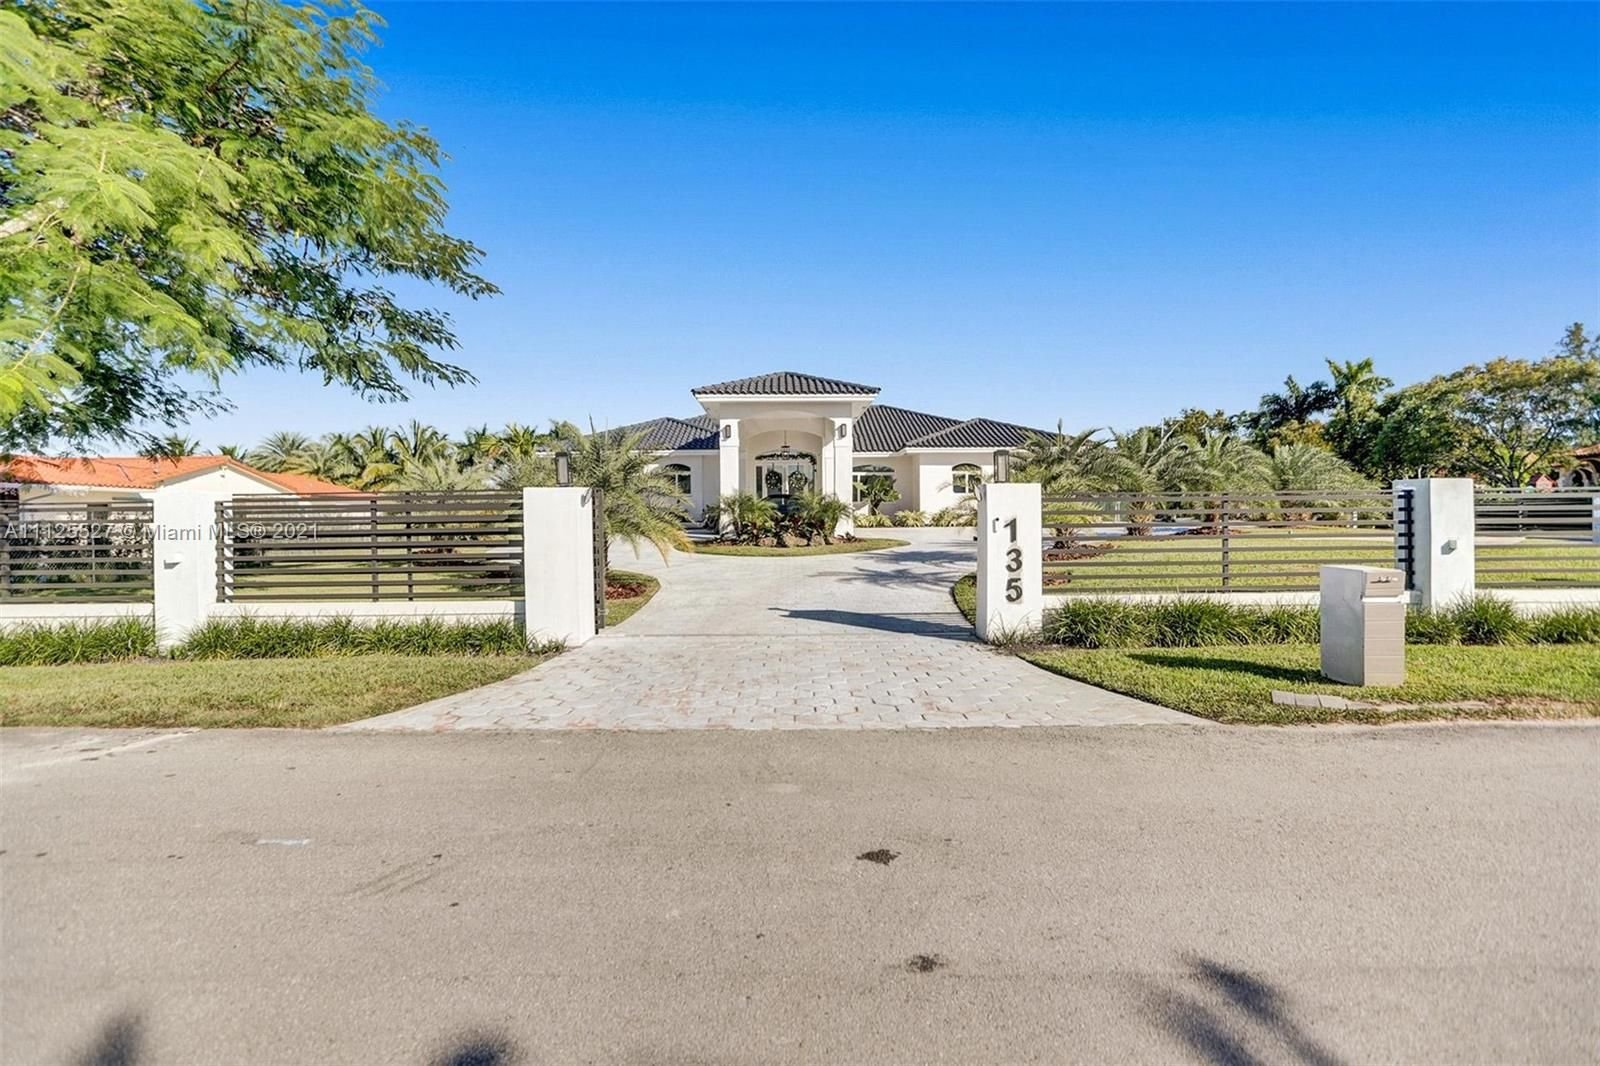 Real estate property located at 135 125th Ave, Miami-Dade County, Miami, FL